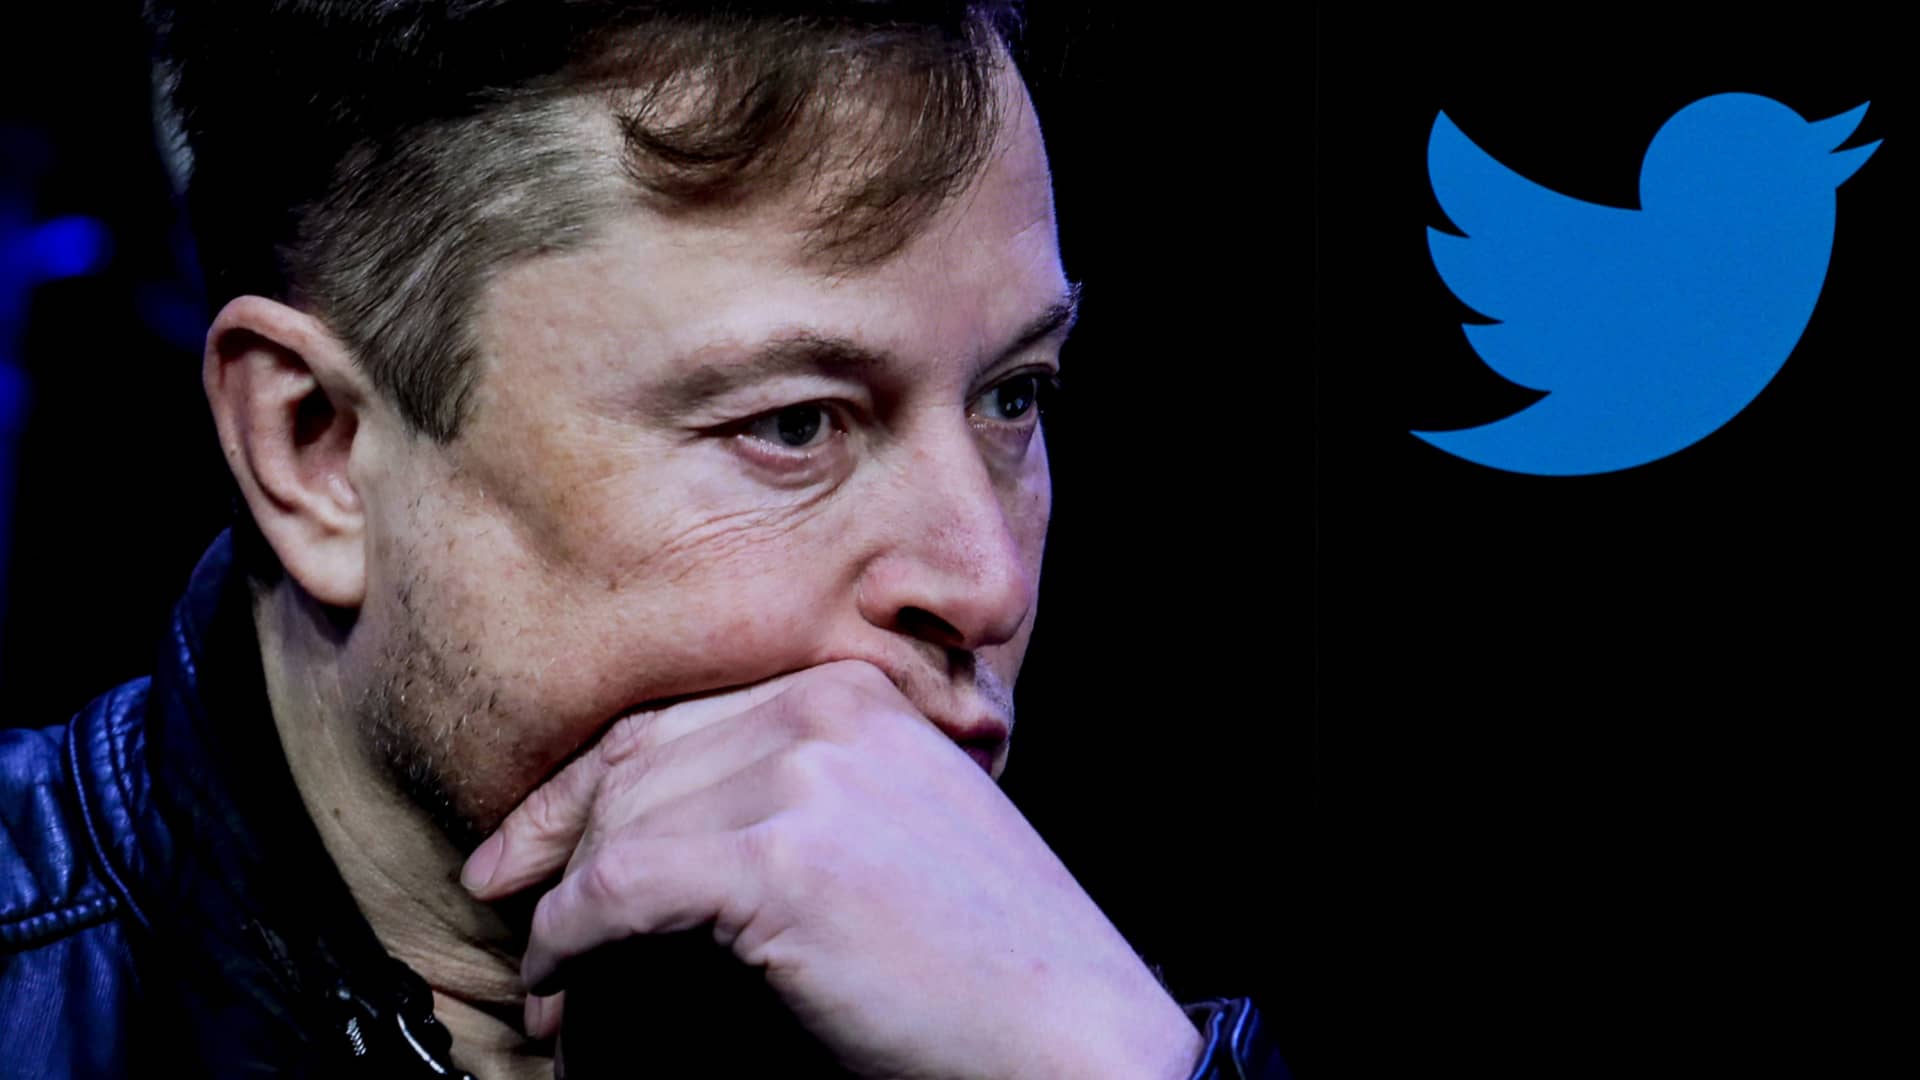 Untagged Twitter parody accounts risk permanent suspension